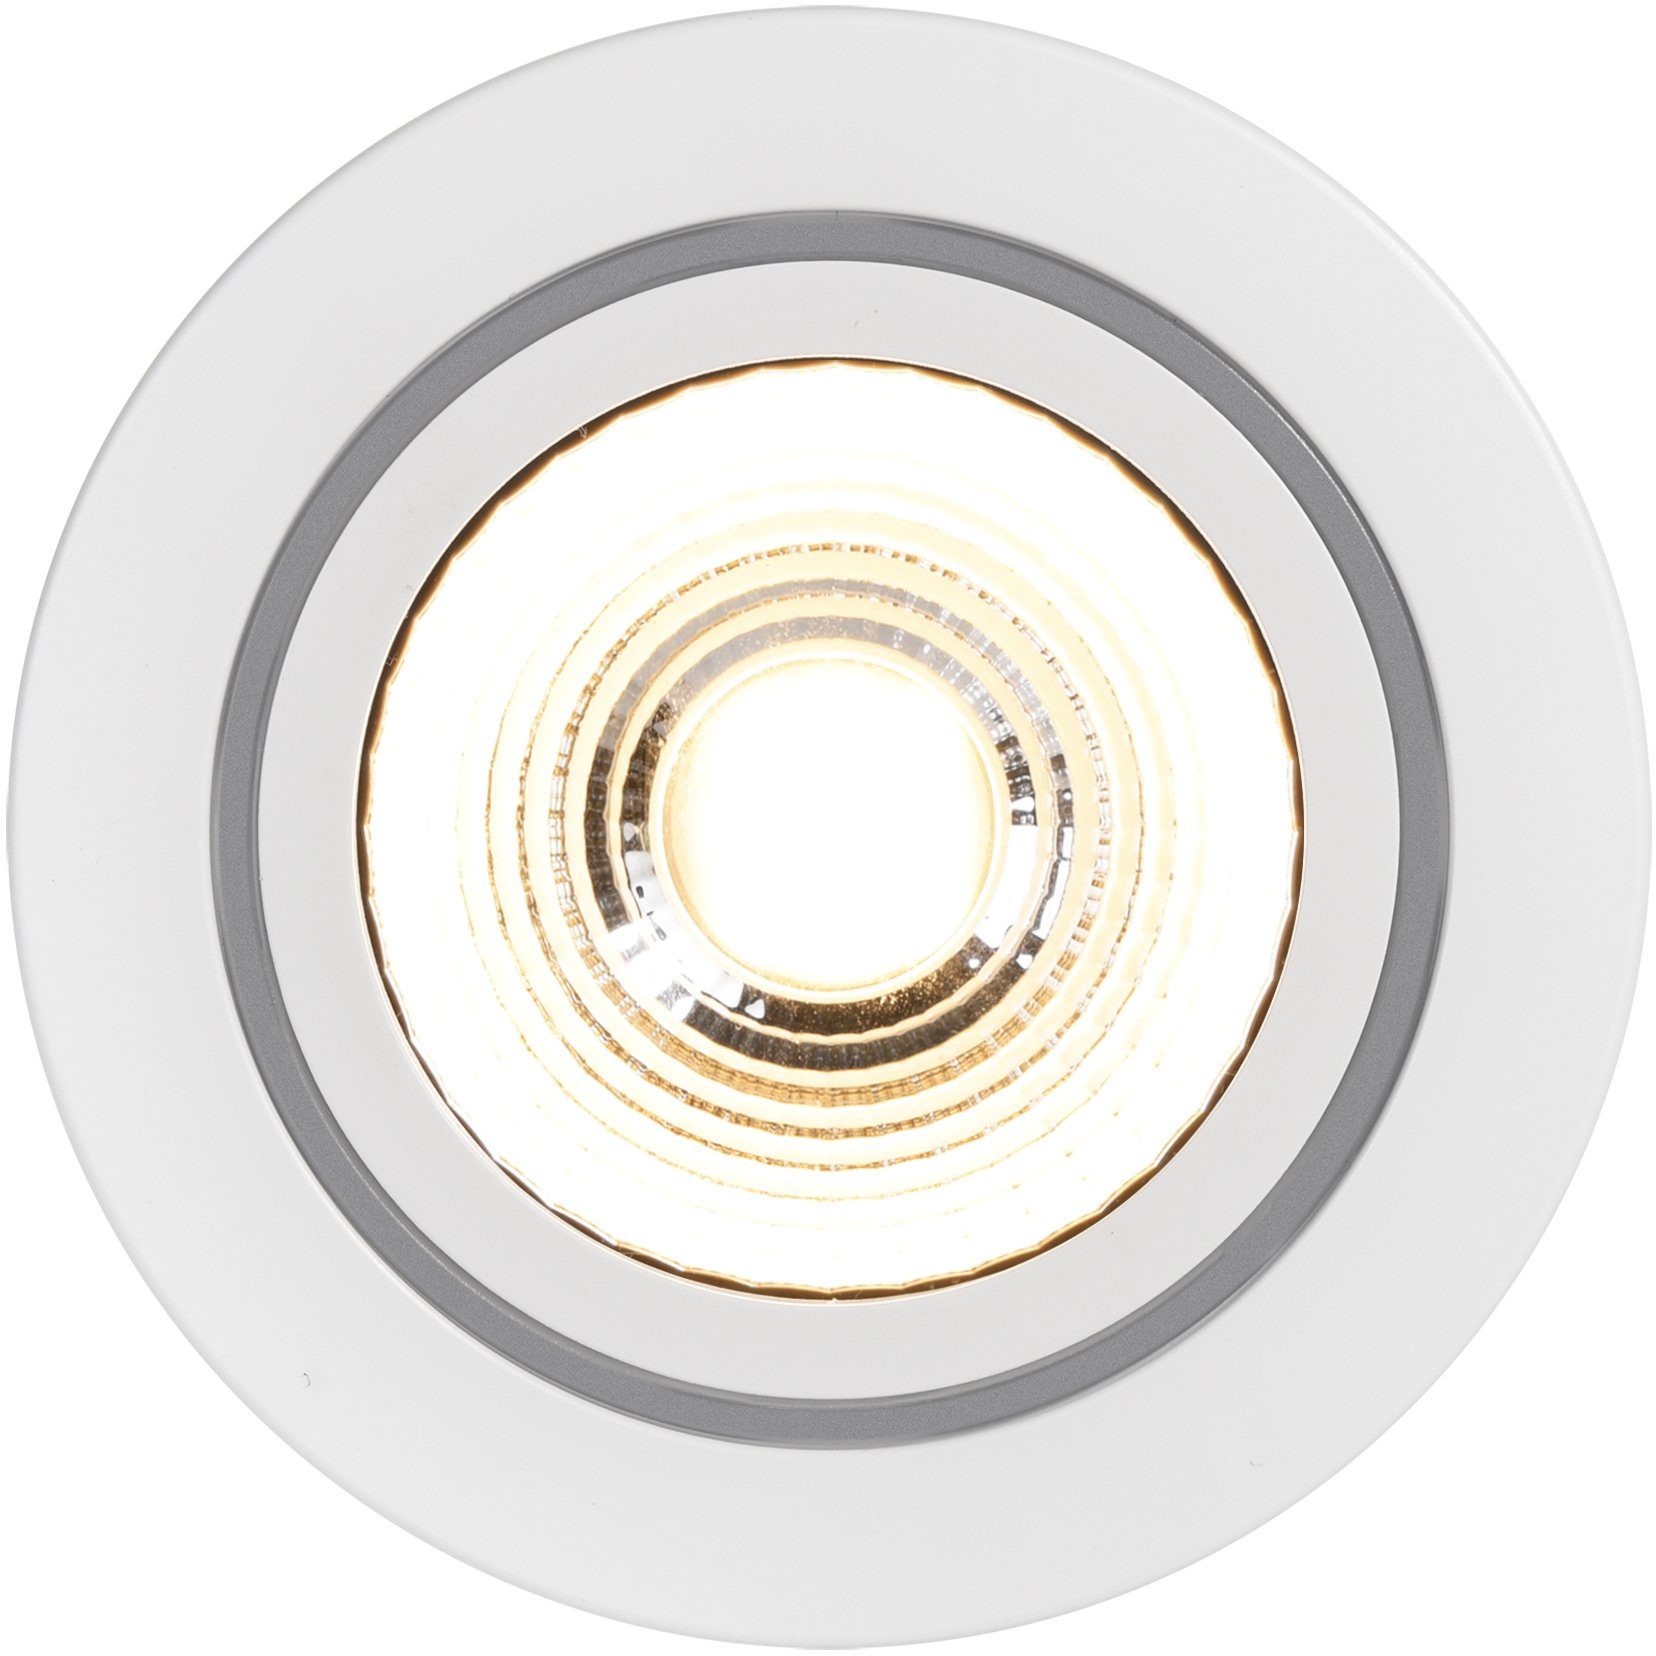 Nordlux Deckenstrahler Alec, 480 LED, inkl. integriert, Warmweiß, 3 inkl. Stufen 6W LED Lumen, Dimmer fest